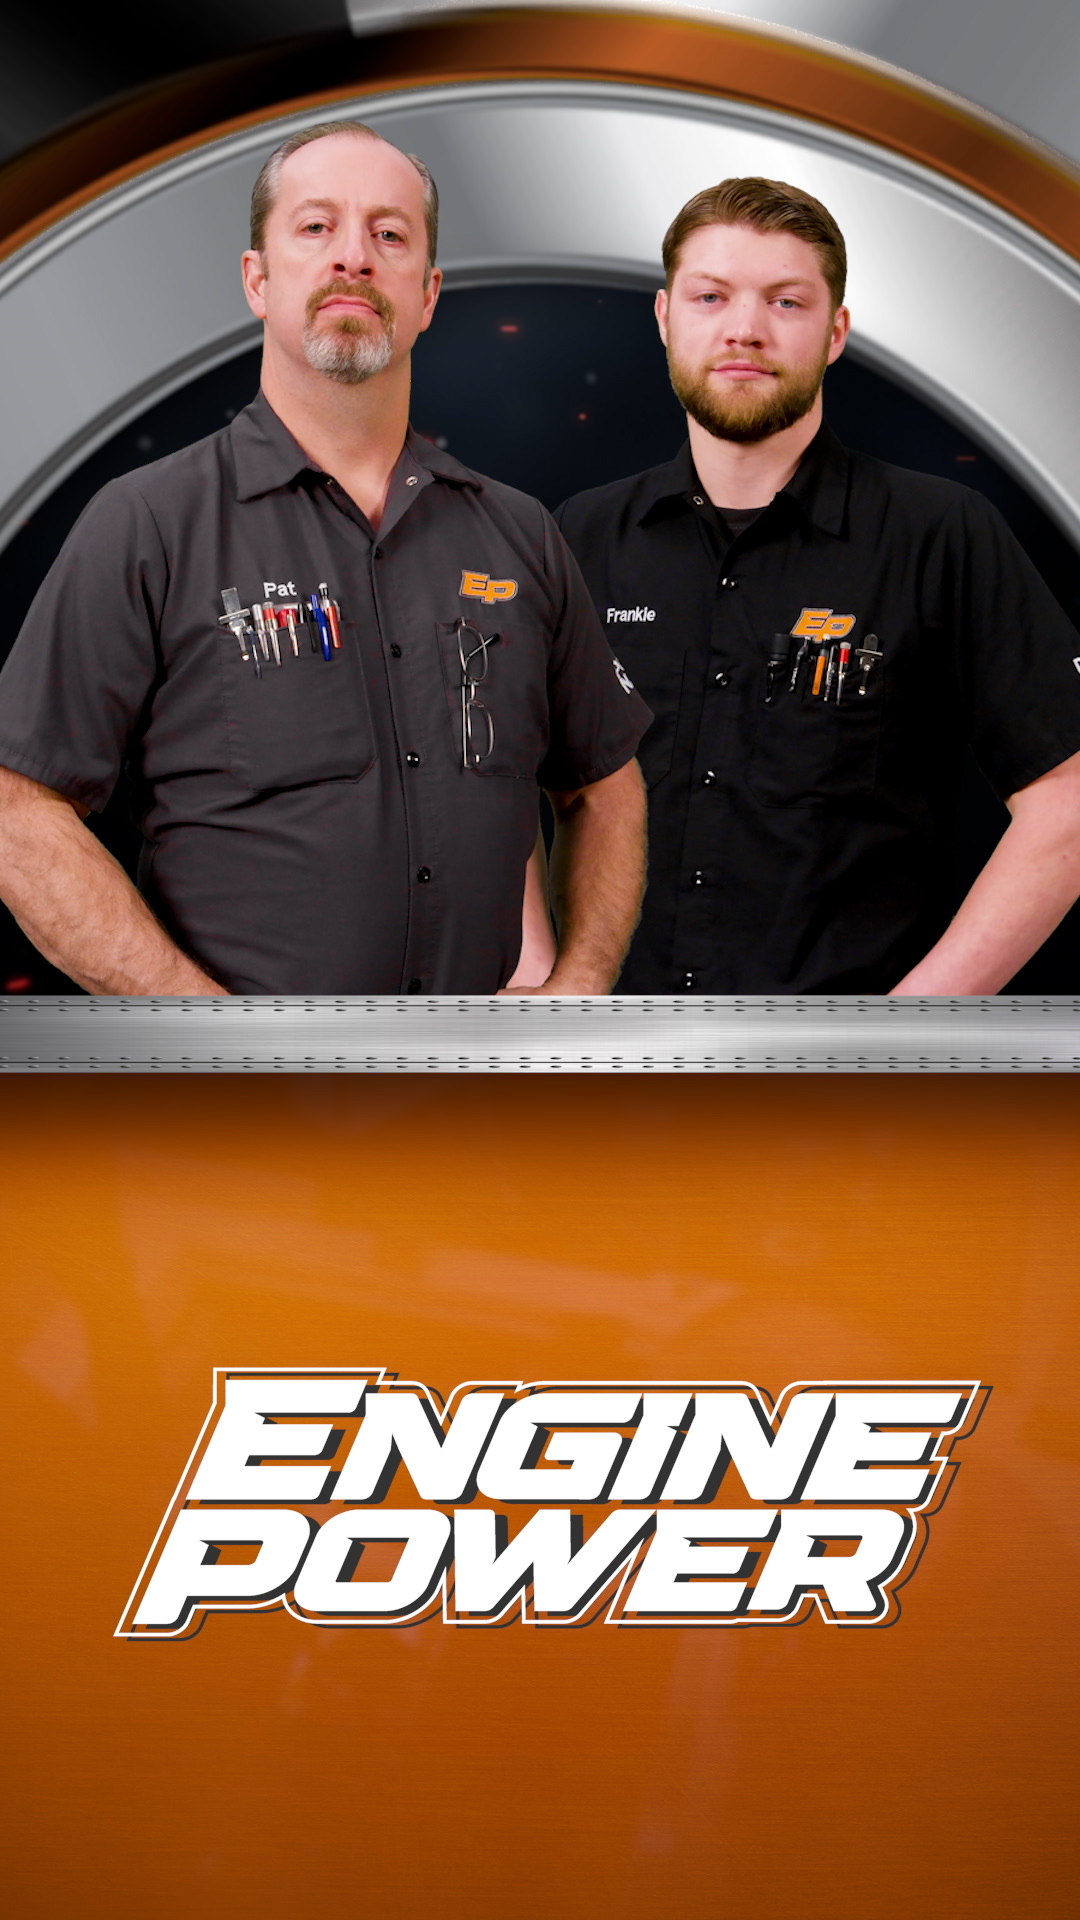 Engine Power Logo